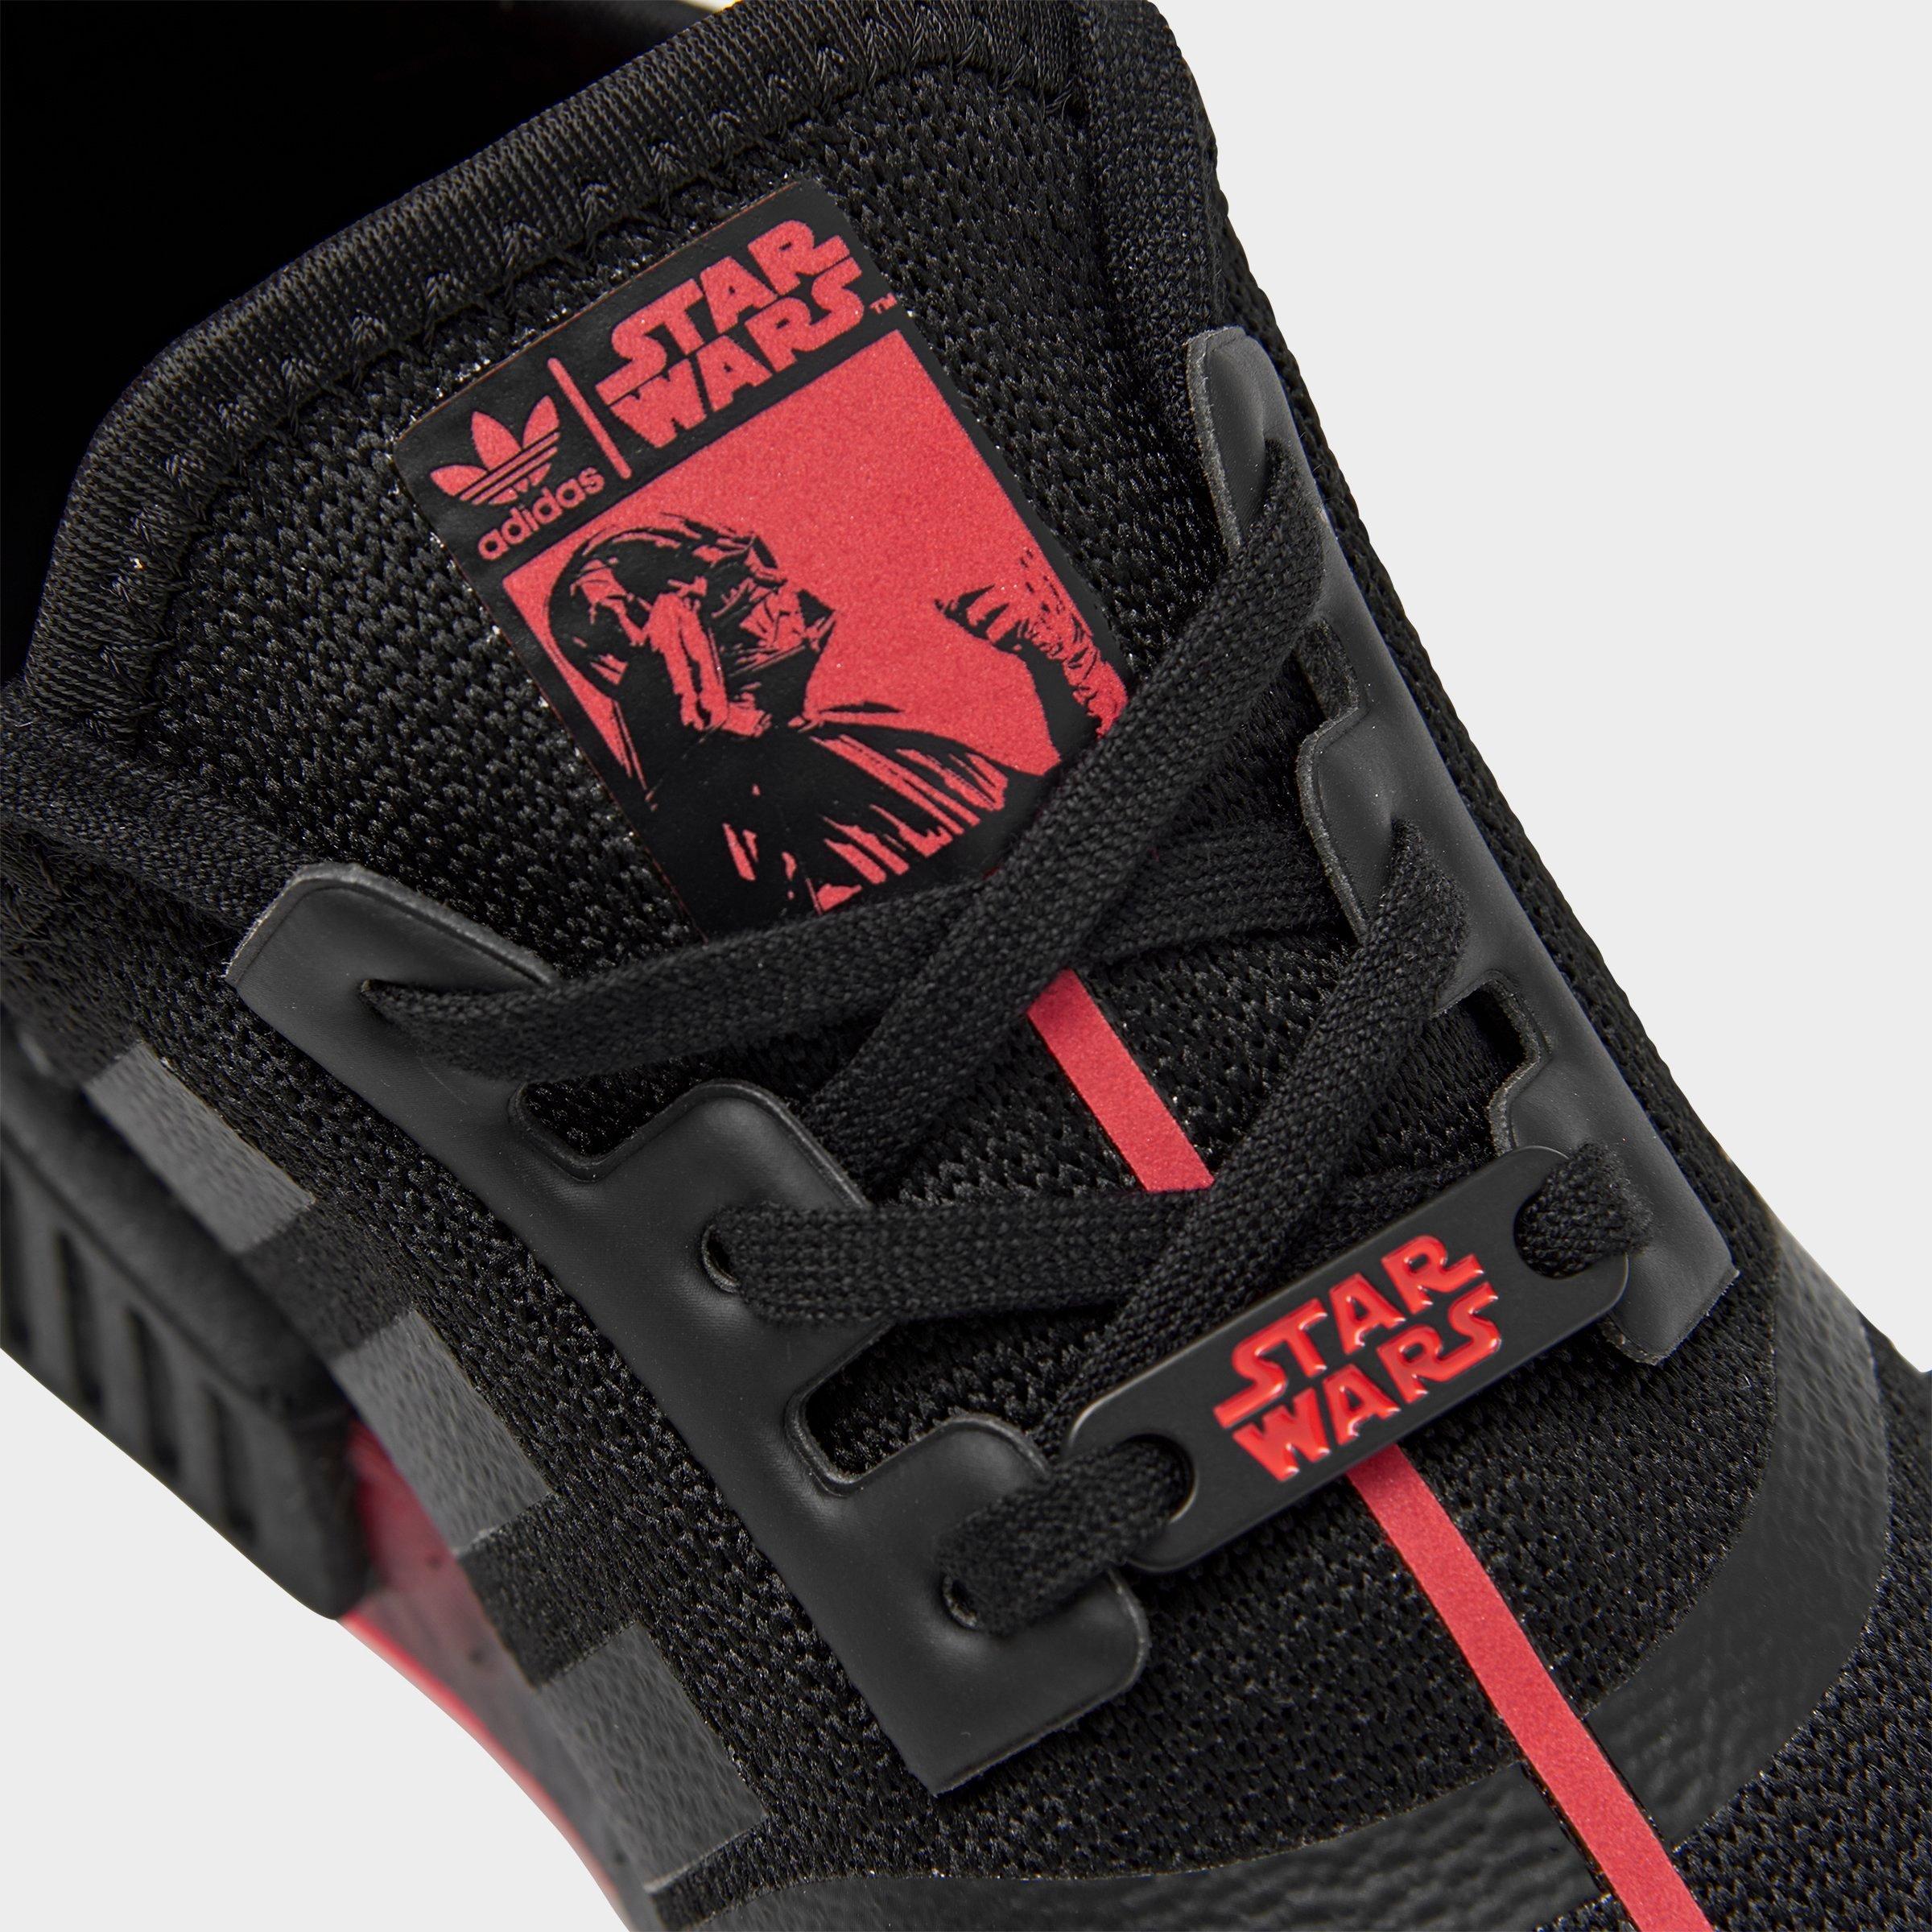 Adidas NMD R1 Primeknit Datamosh LP Sneakers Reddit